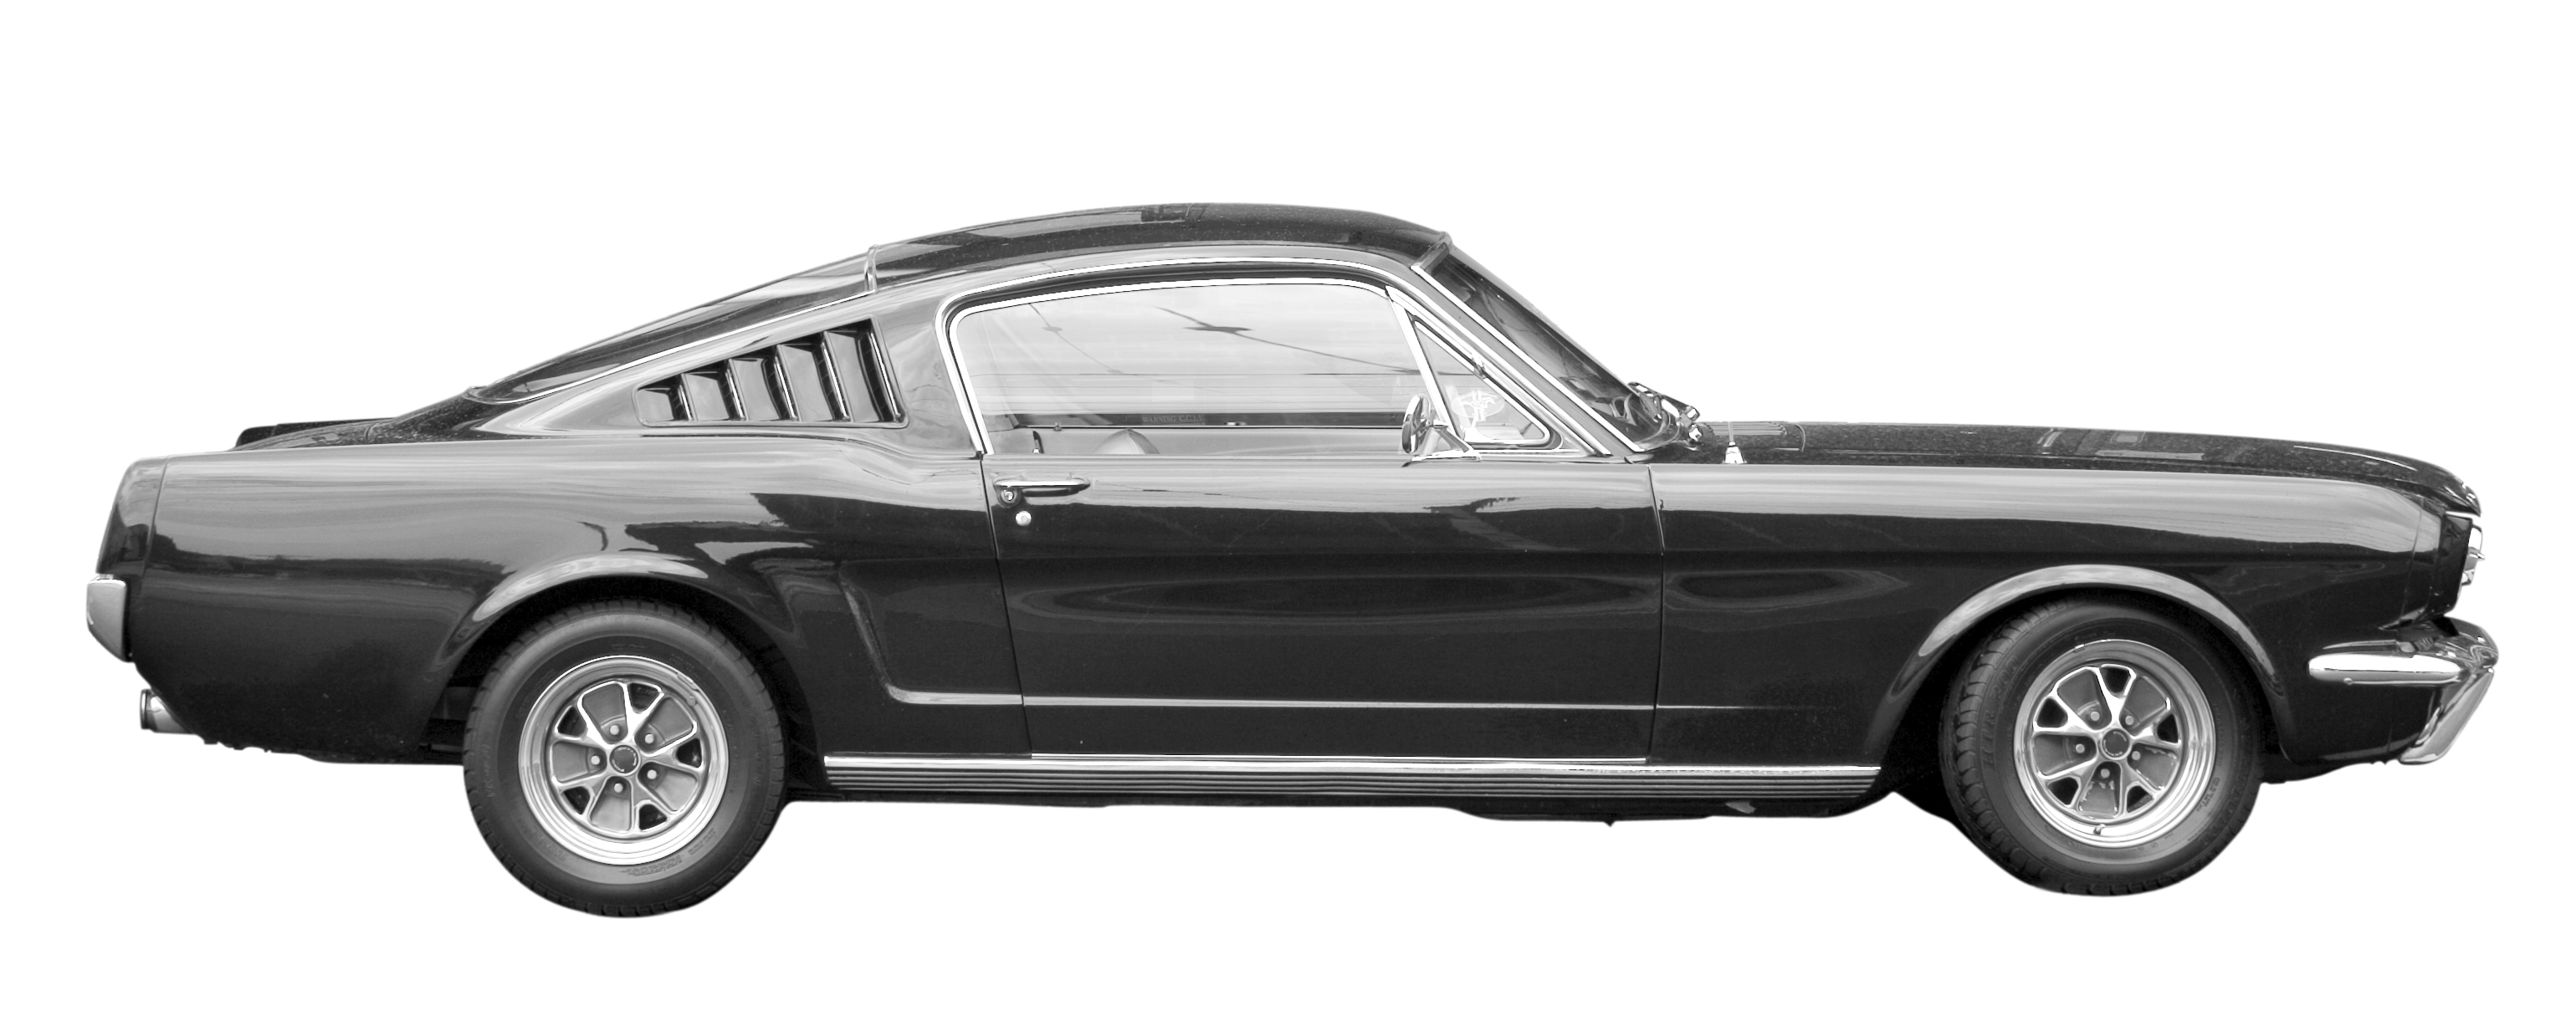 1969 Mustang GT.jpg